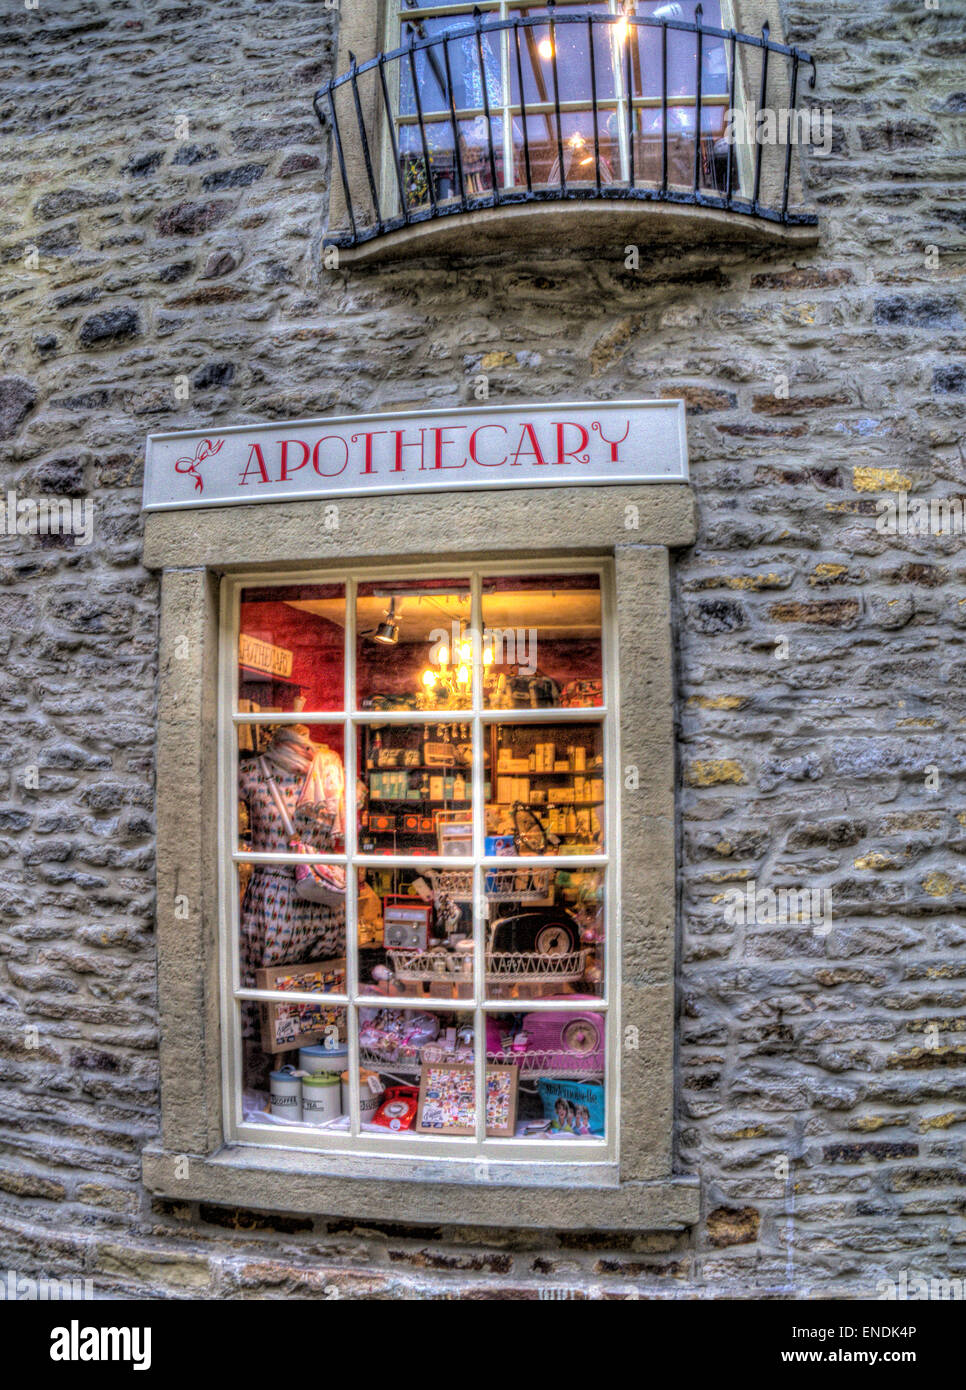 Explore the old Apothecary shop Stock Photo